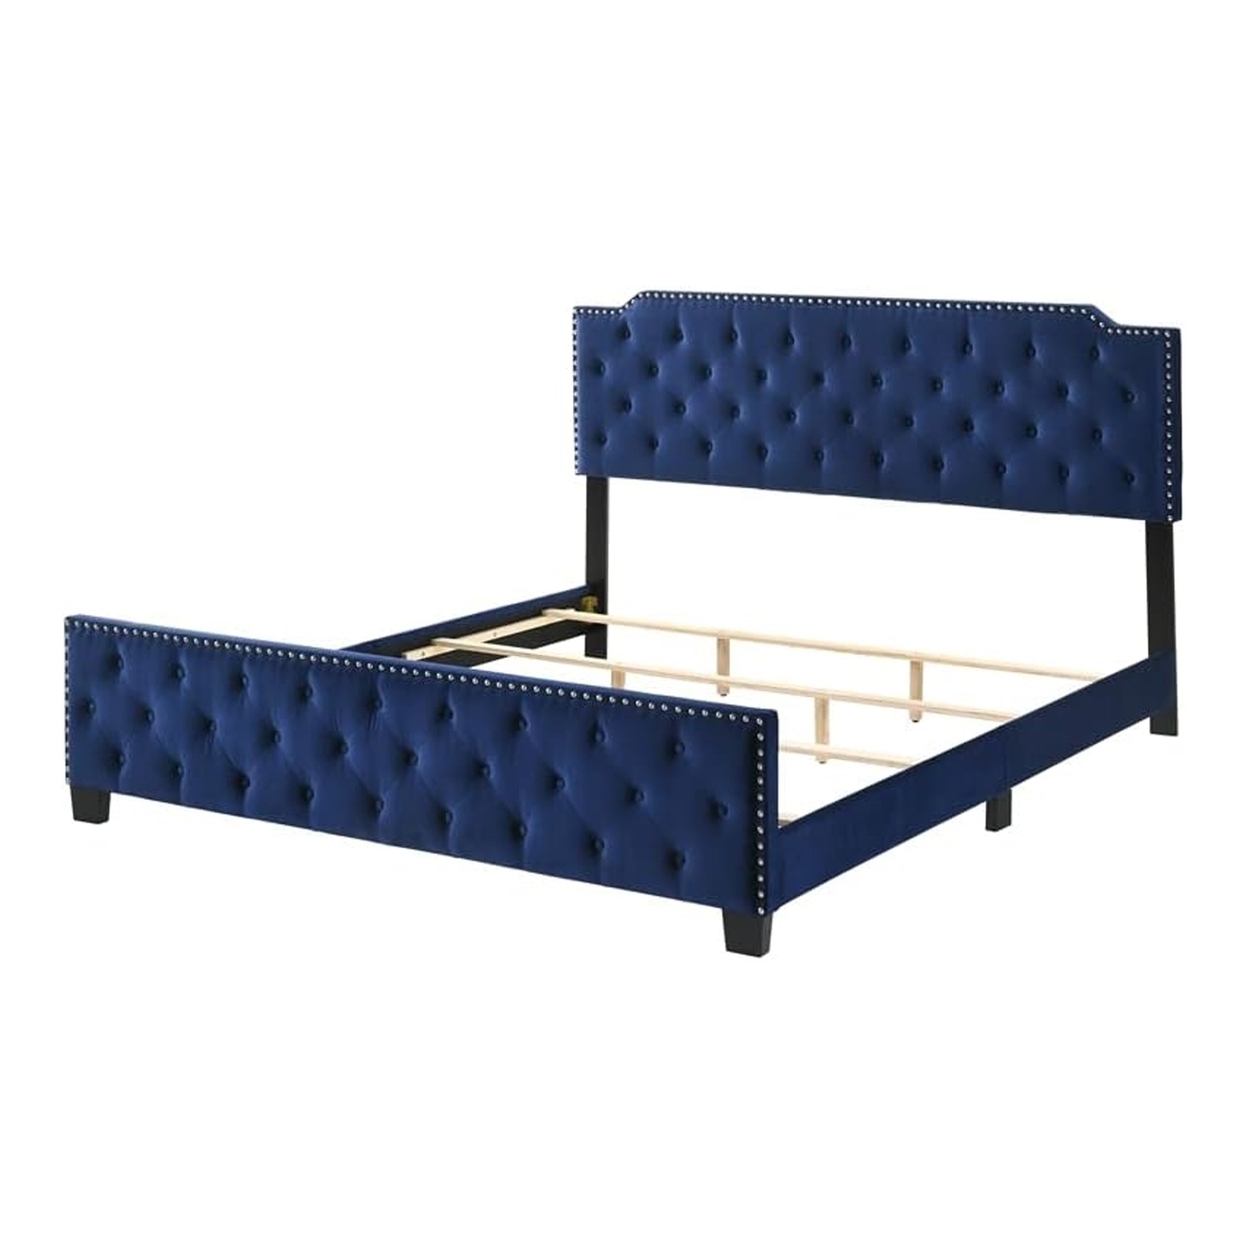 Agapi King Size Bed, Button Tufted, Nailhead Trim, Blue Fabric Upholstery- Saltoro Sherpi